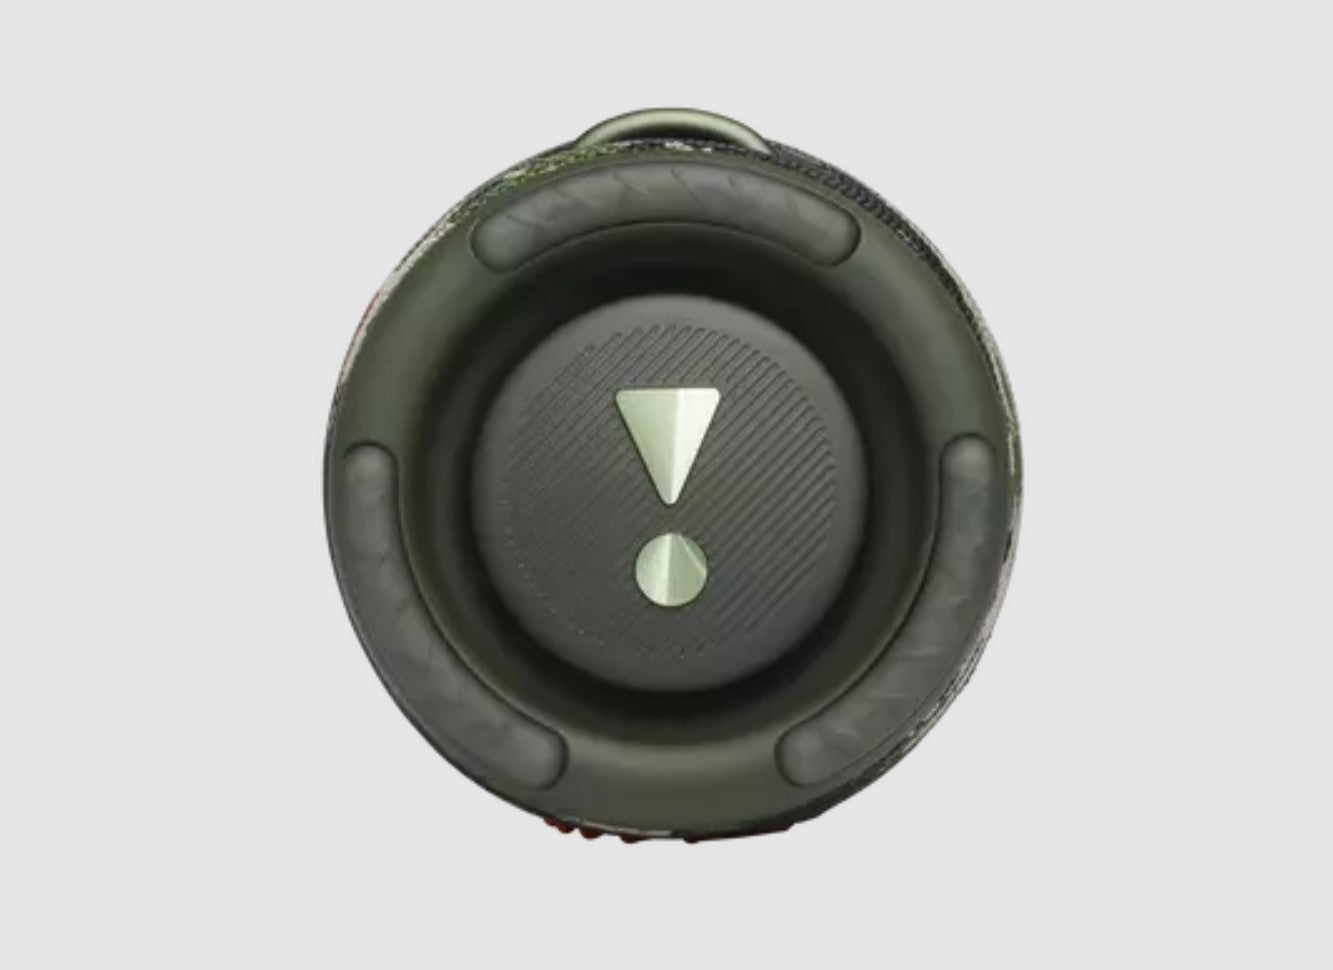 JBL JBLXTREME3CAMOAM-Z Xtreme 3 Portable Waterproof Speaker Camo - Certified Refurbished